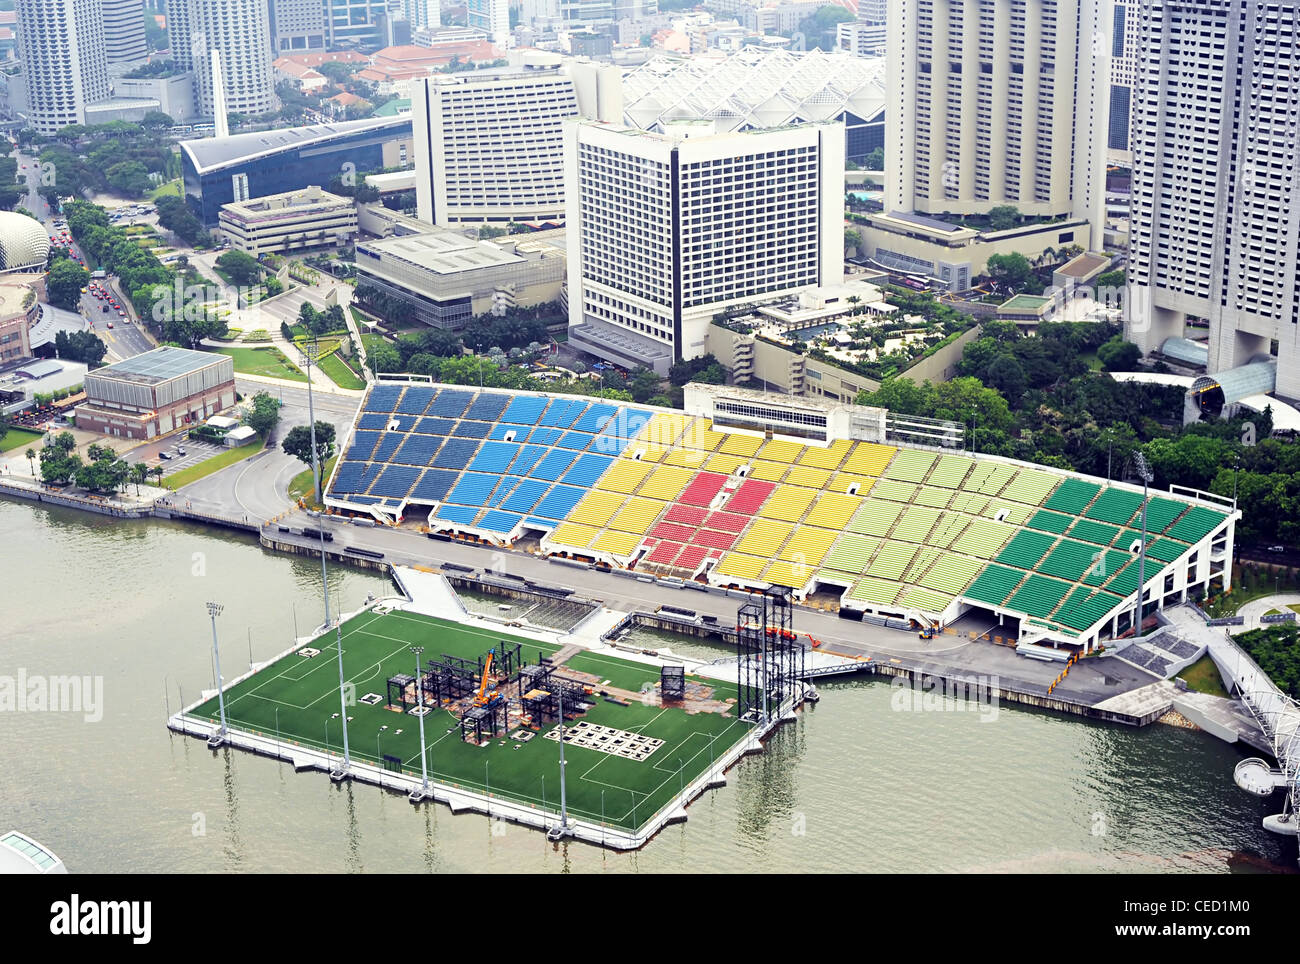 Foot Legend - Le stade de football flottant à Singapour ! Floating Soccer  Field in Marina Bay, Singapore.